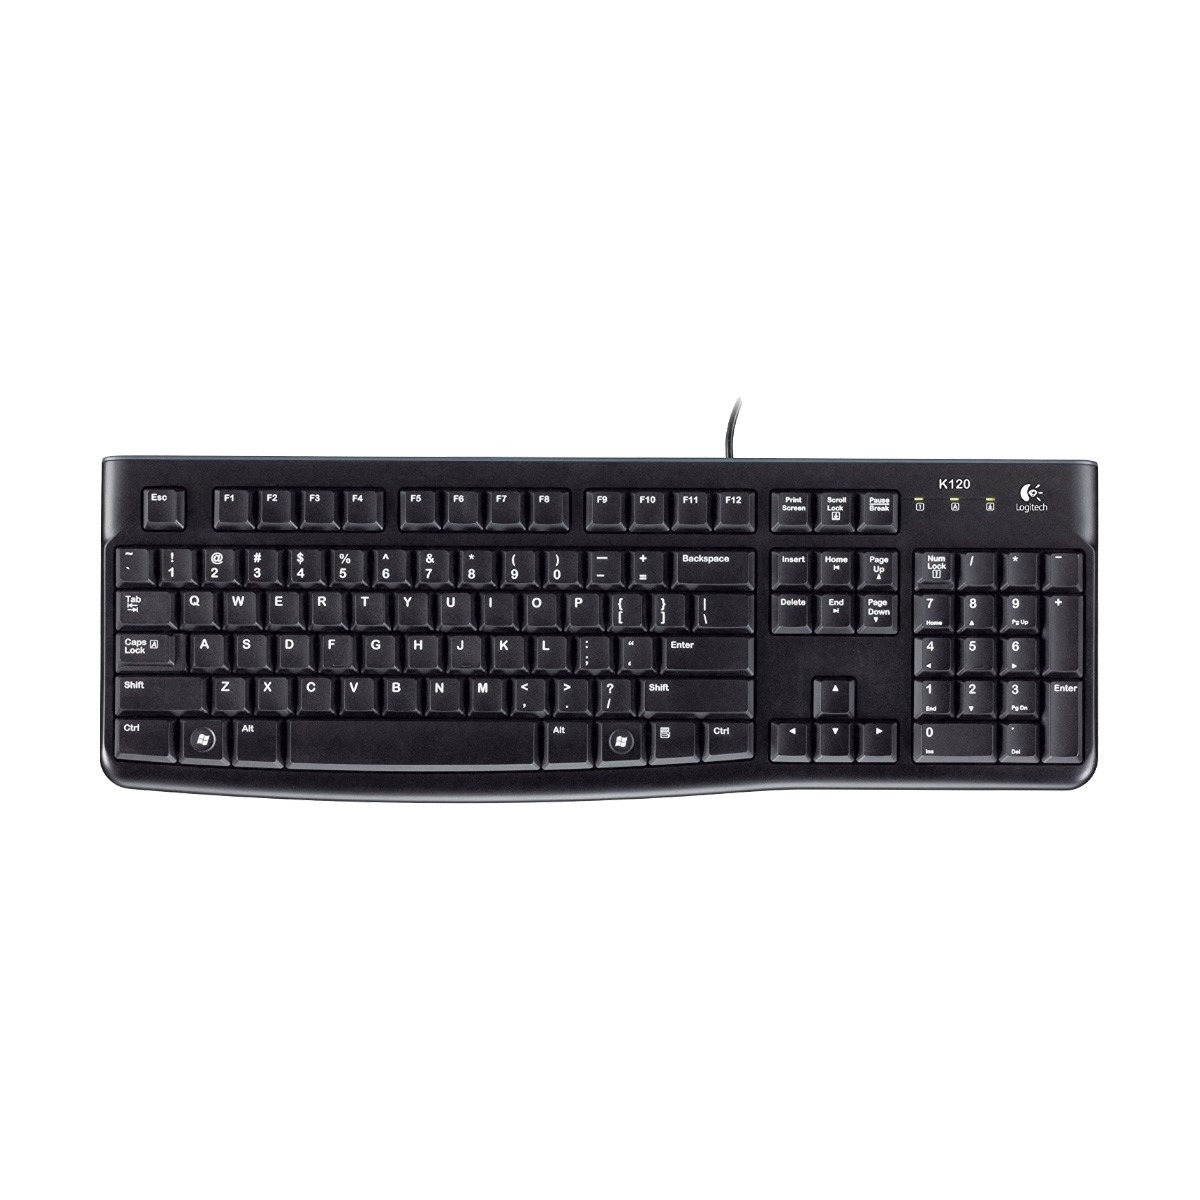 install bangla keyboard for laptop